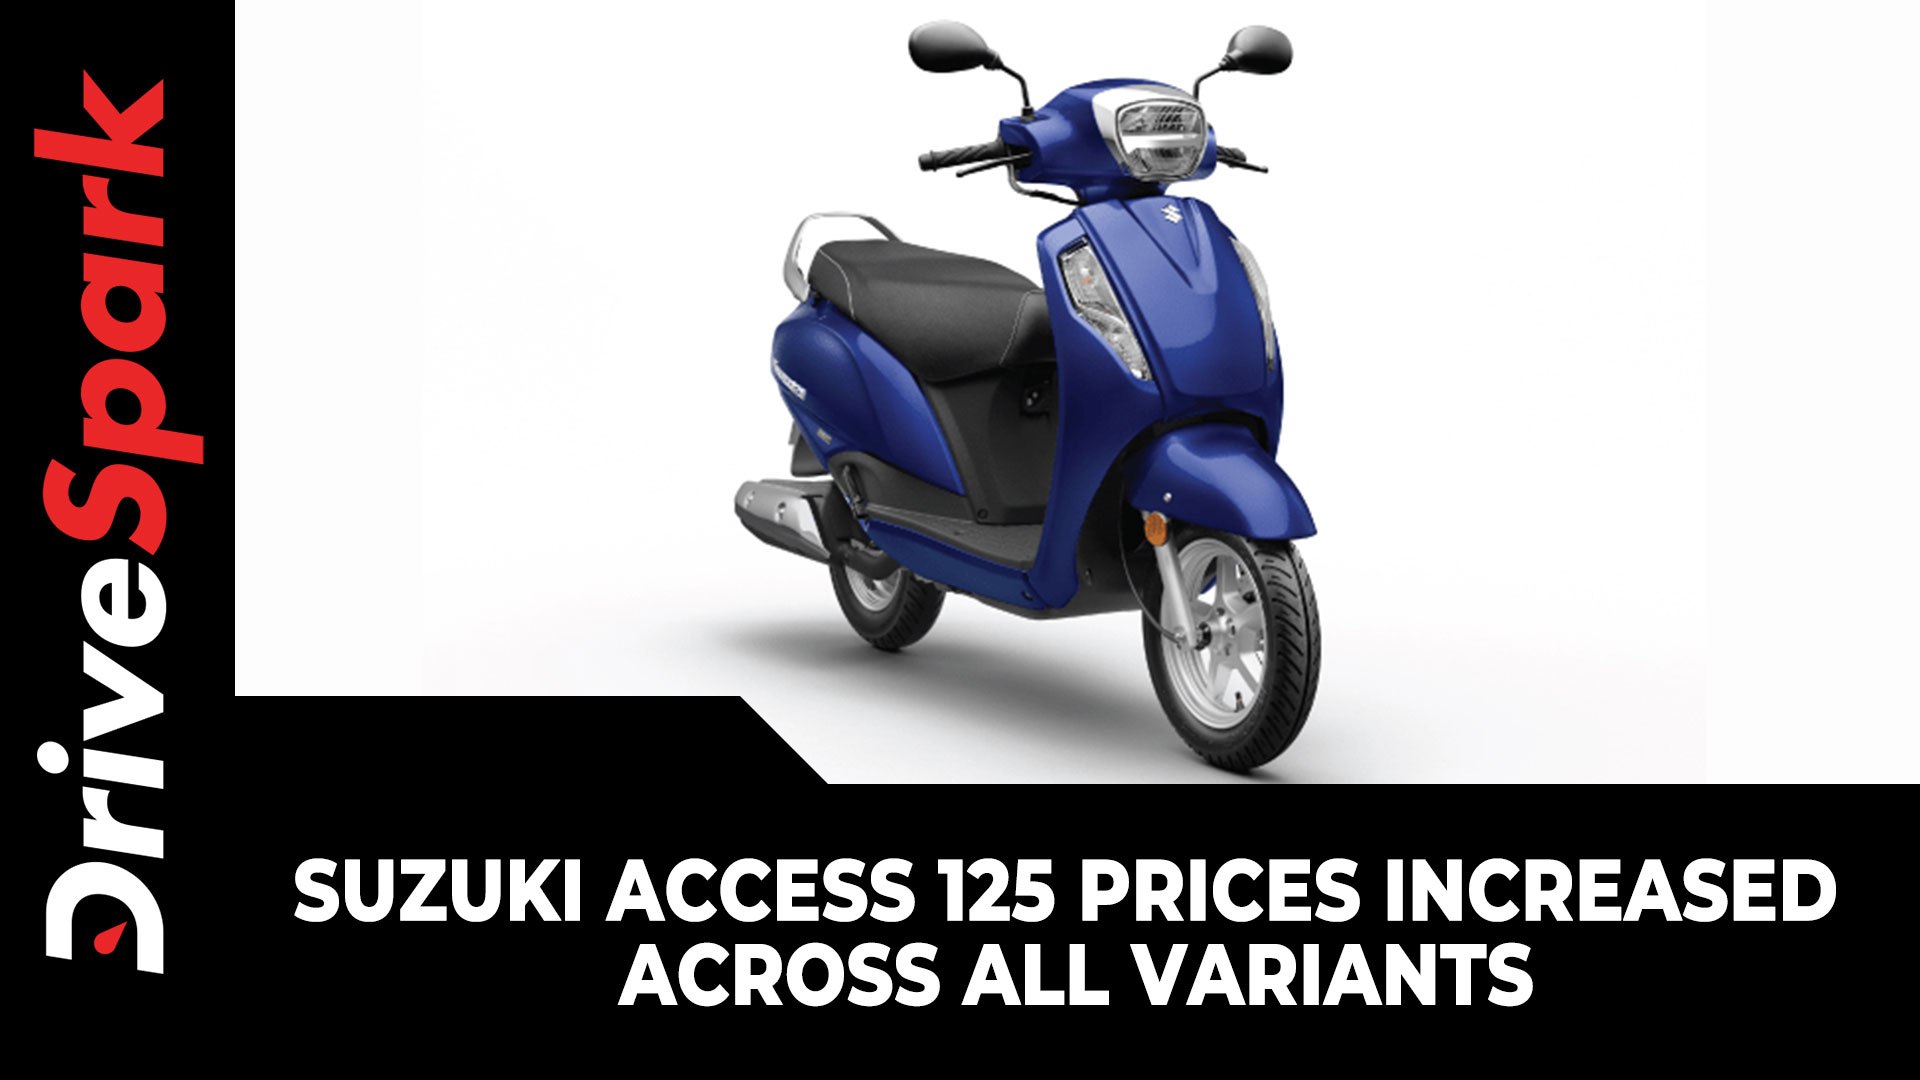 The latest Suzuki Access 125 videos on Dailymotion